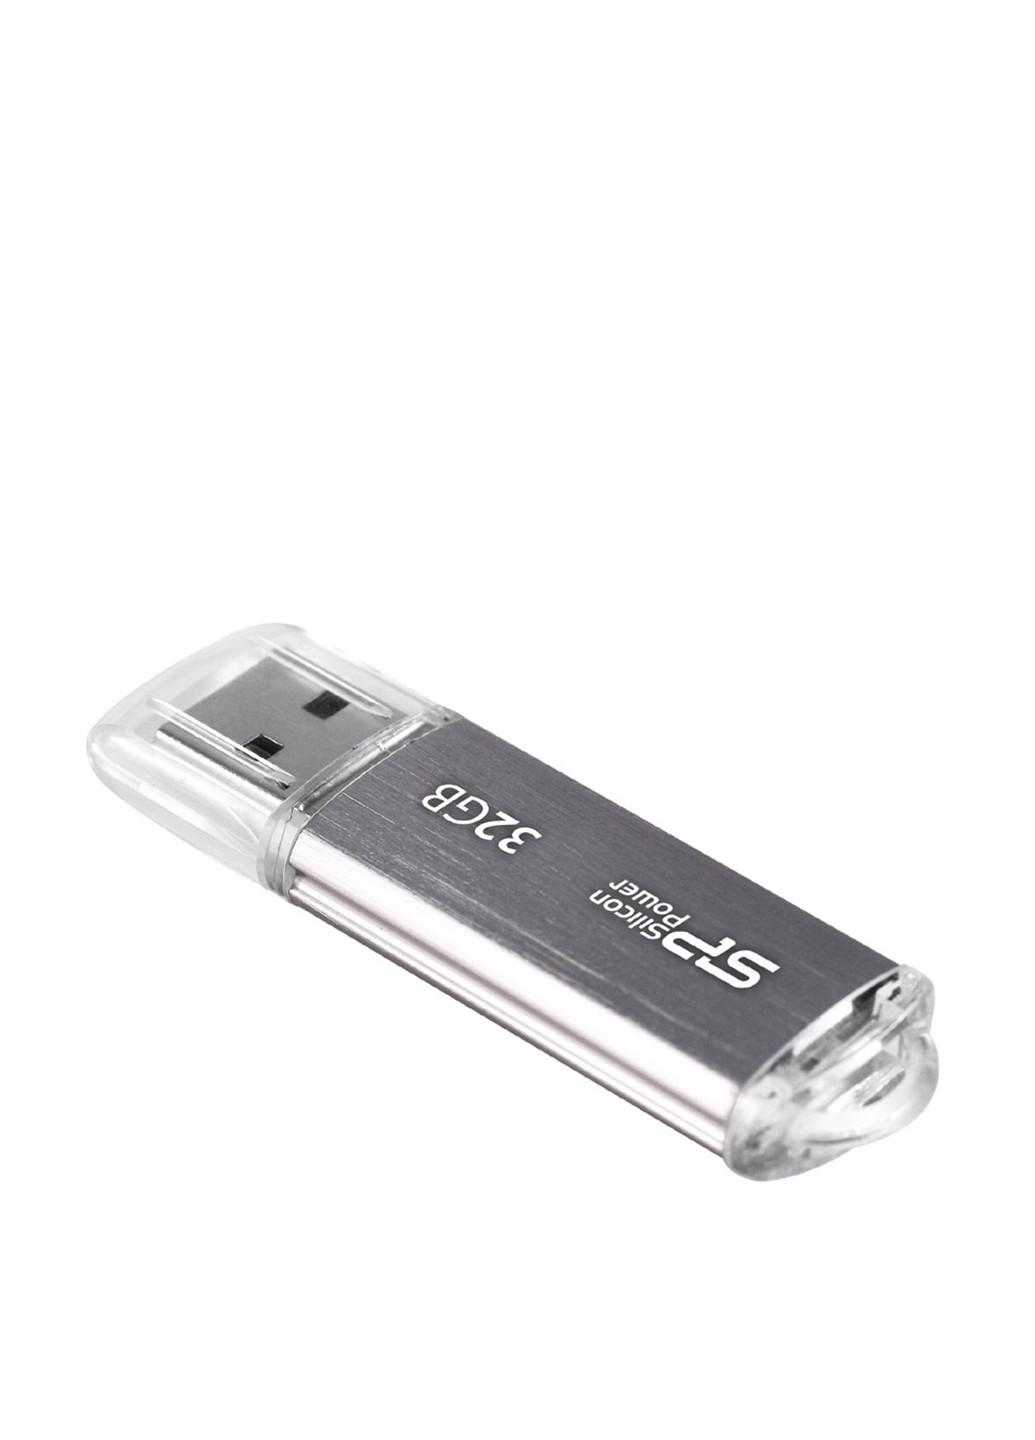 Флеш память USB Ultima II I-Series 32GB Silver (SP032GBUF2M01V1S) Silicon Power флеш память usb silicon power ultima ii i-series 32gb silver (sp032gbuf2m01v1s) (130221128)